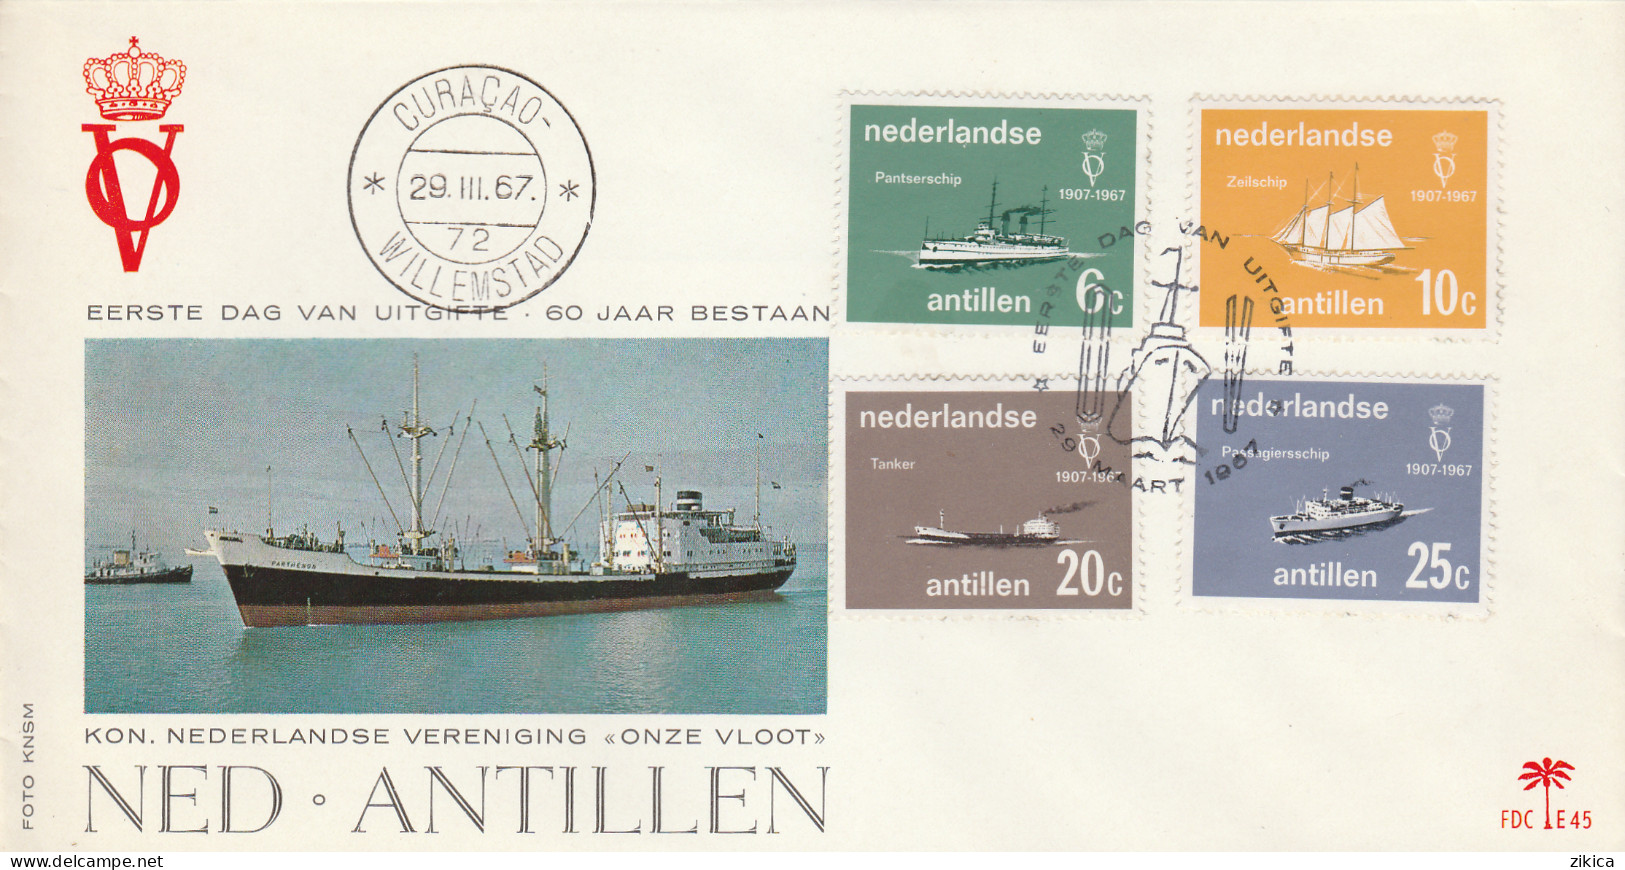 Netherlands - Curacao, Netherlands Antilles Cover 1967,motive Ships - Curacao, Netherlands Antilles, Aruba